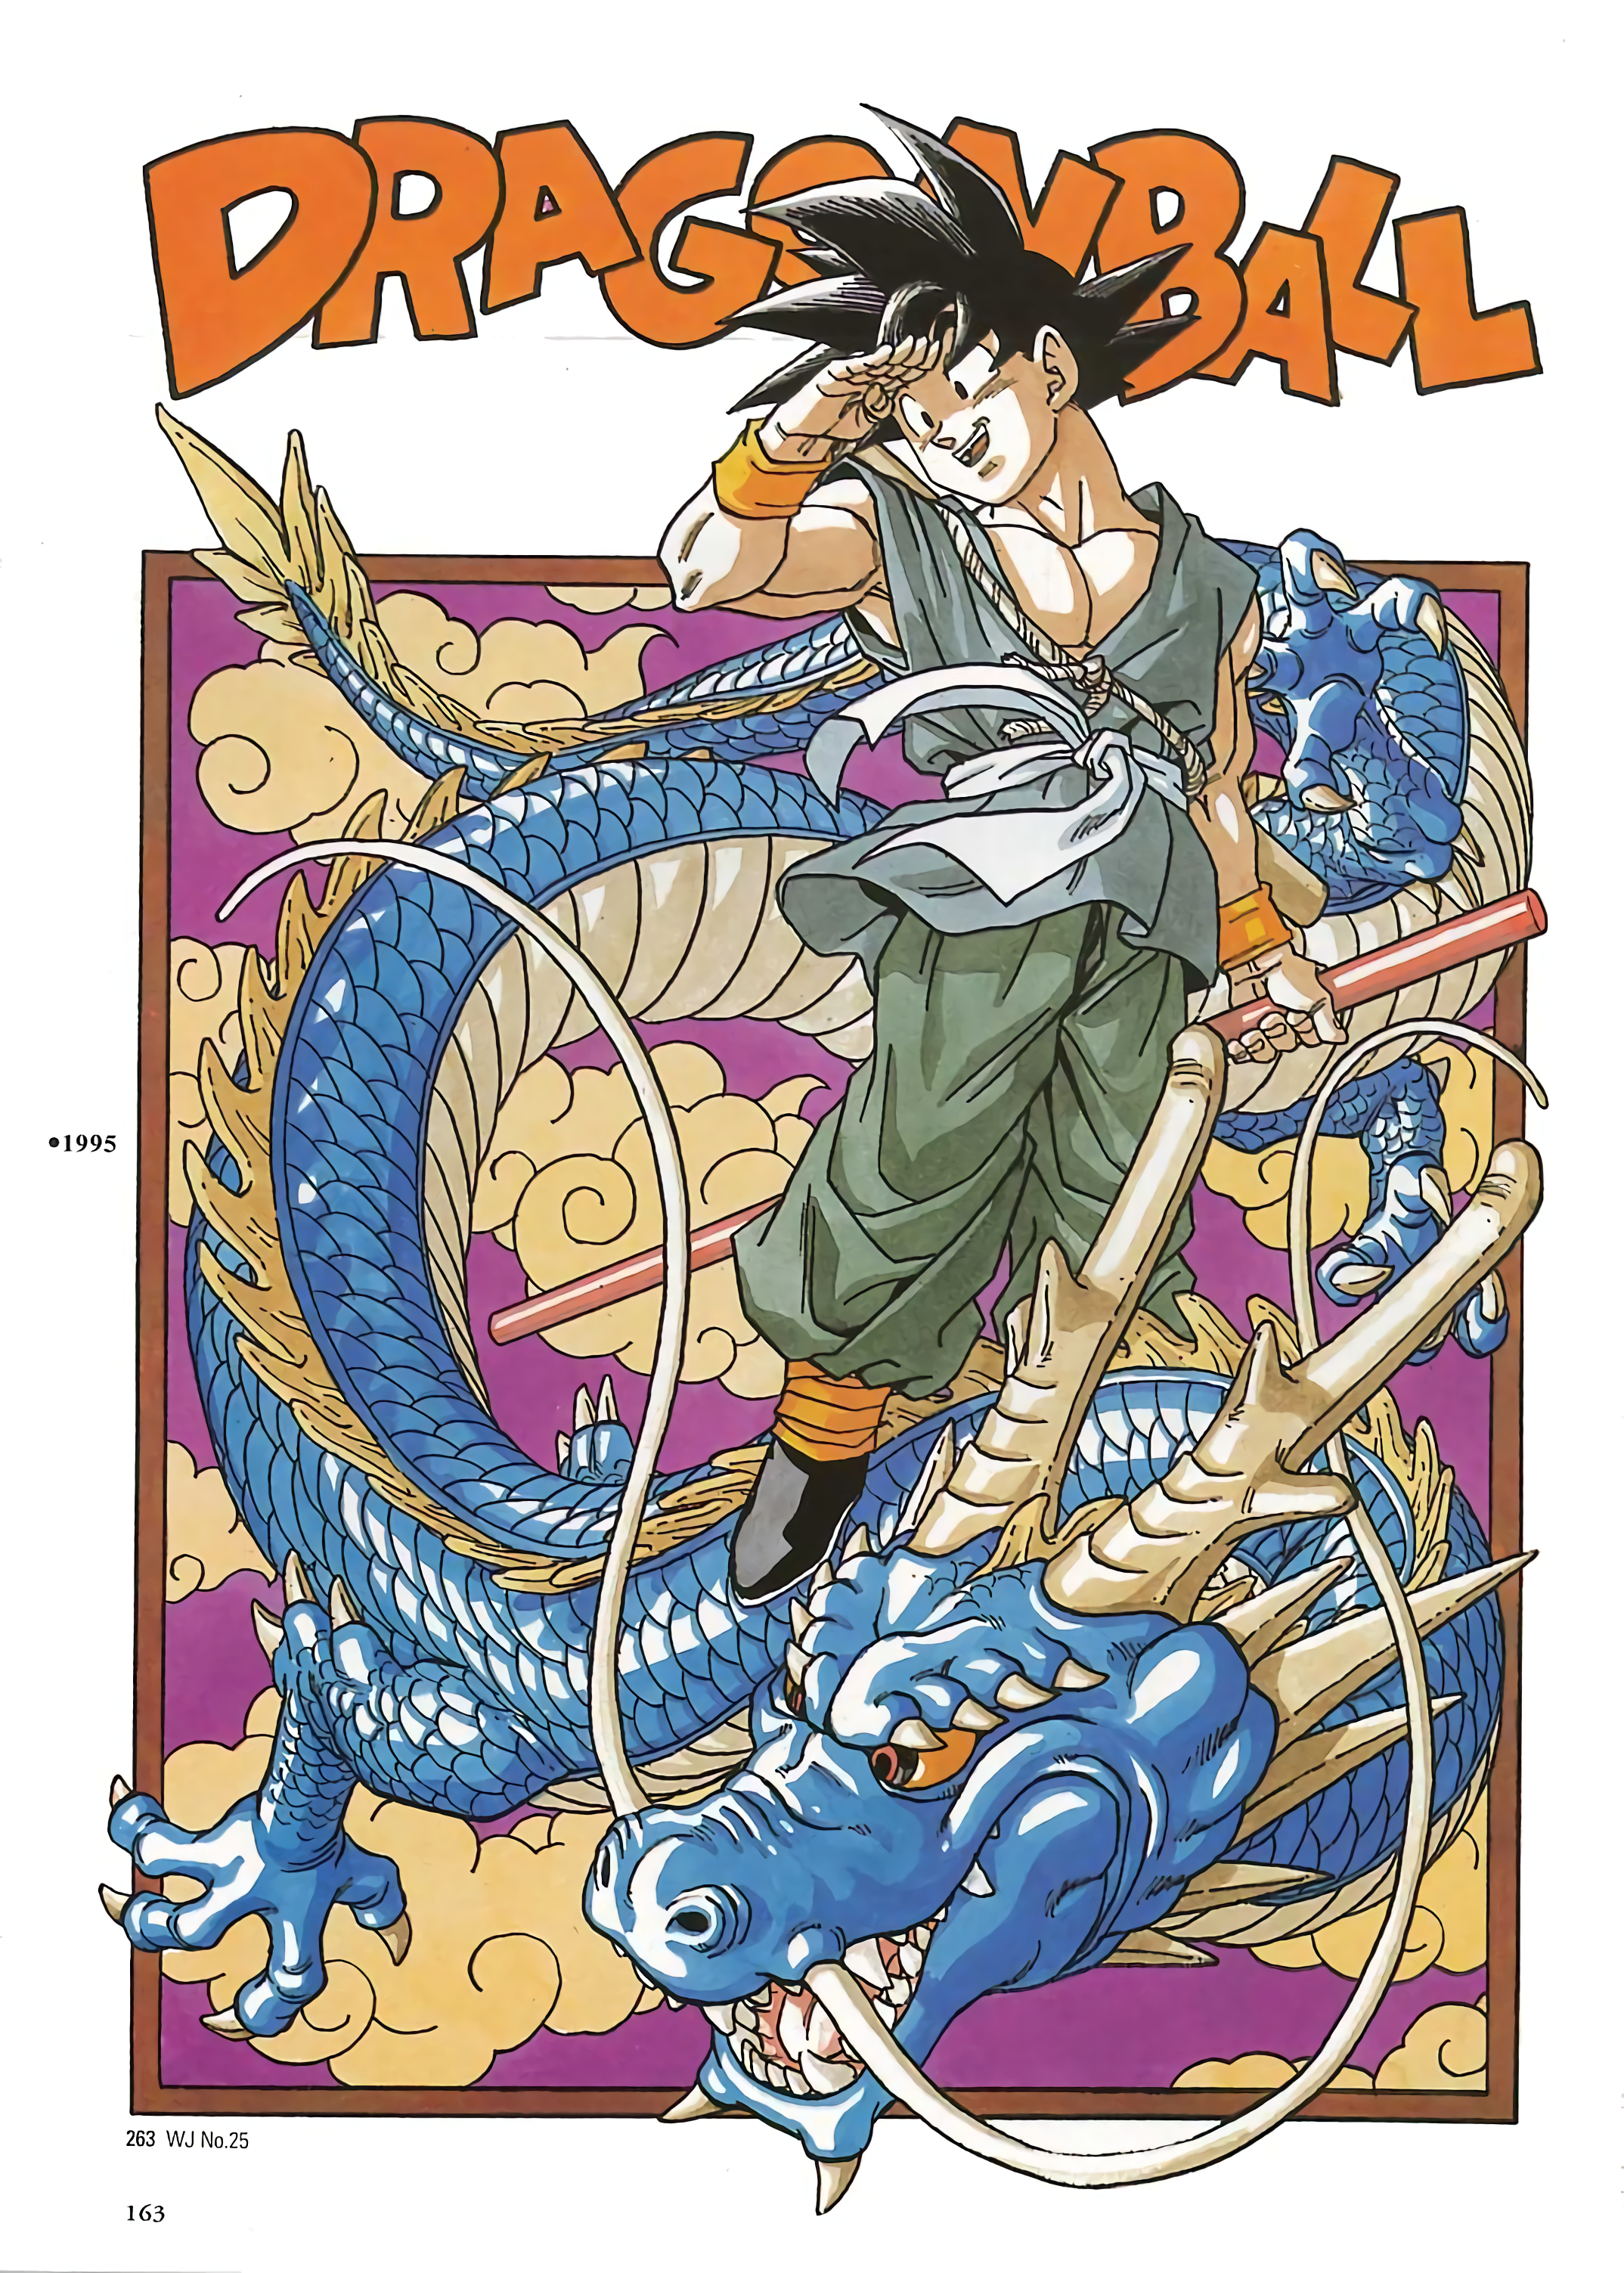 Dragonball Z Manga Panel Redraw by Audball9000 on DeviantArt